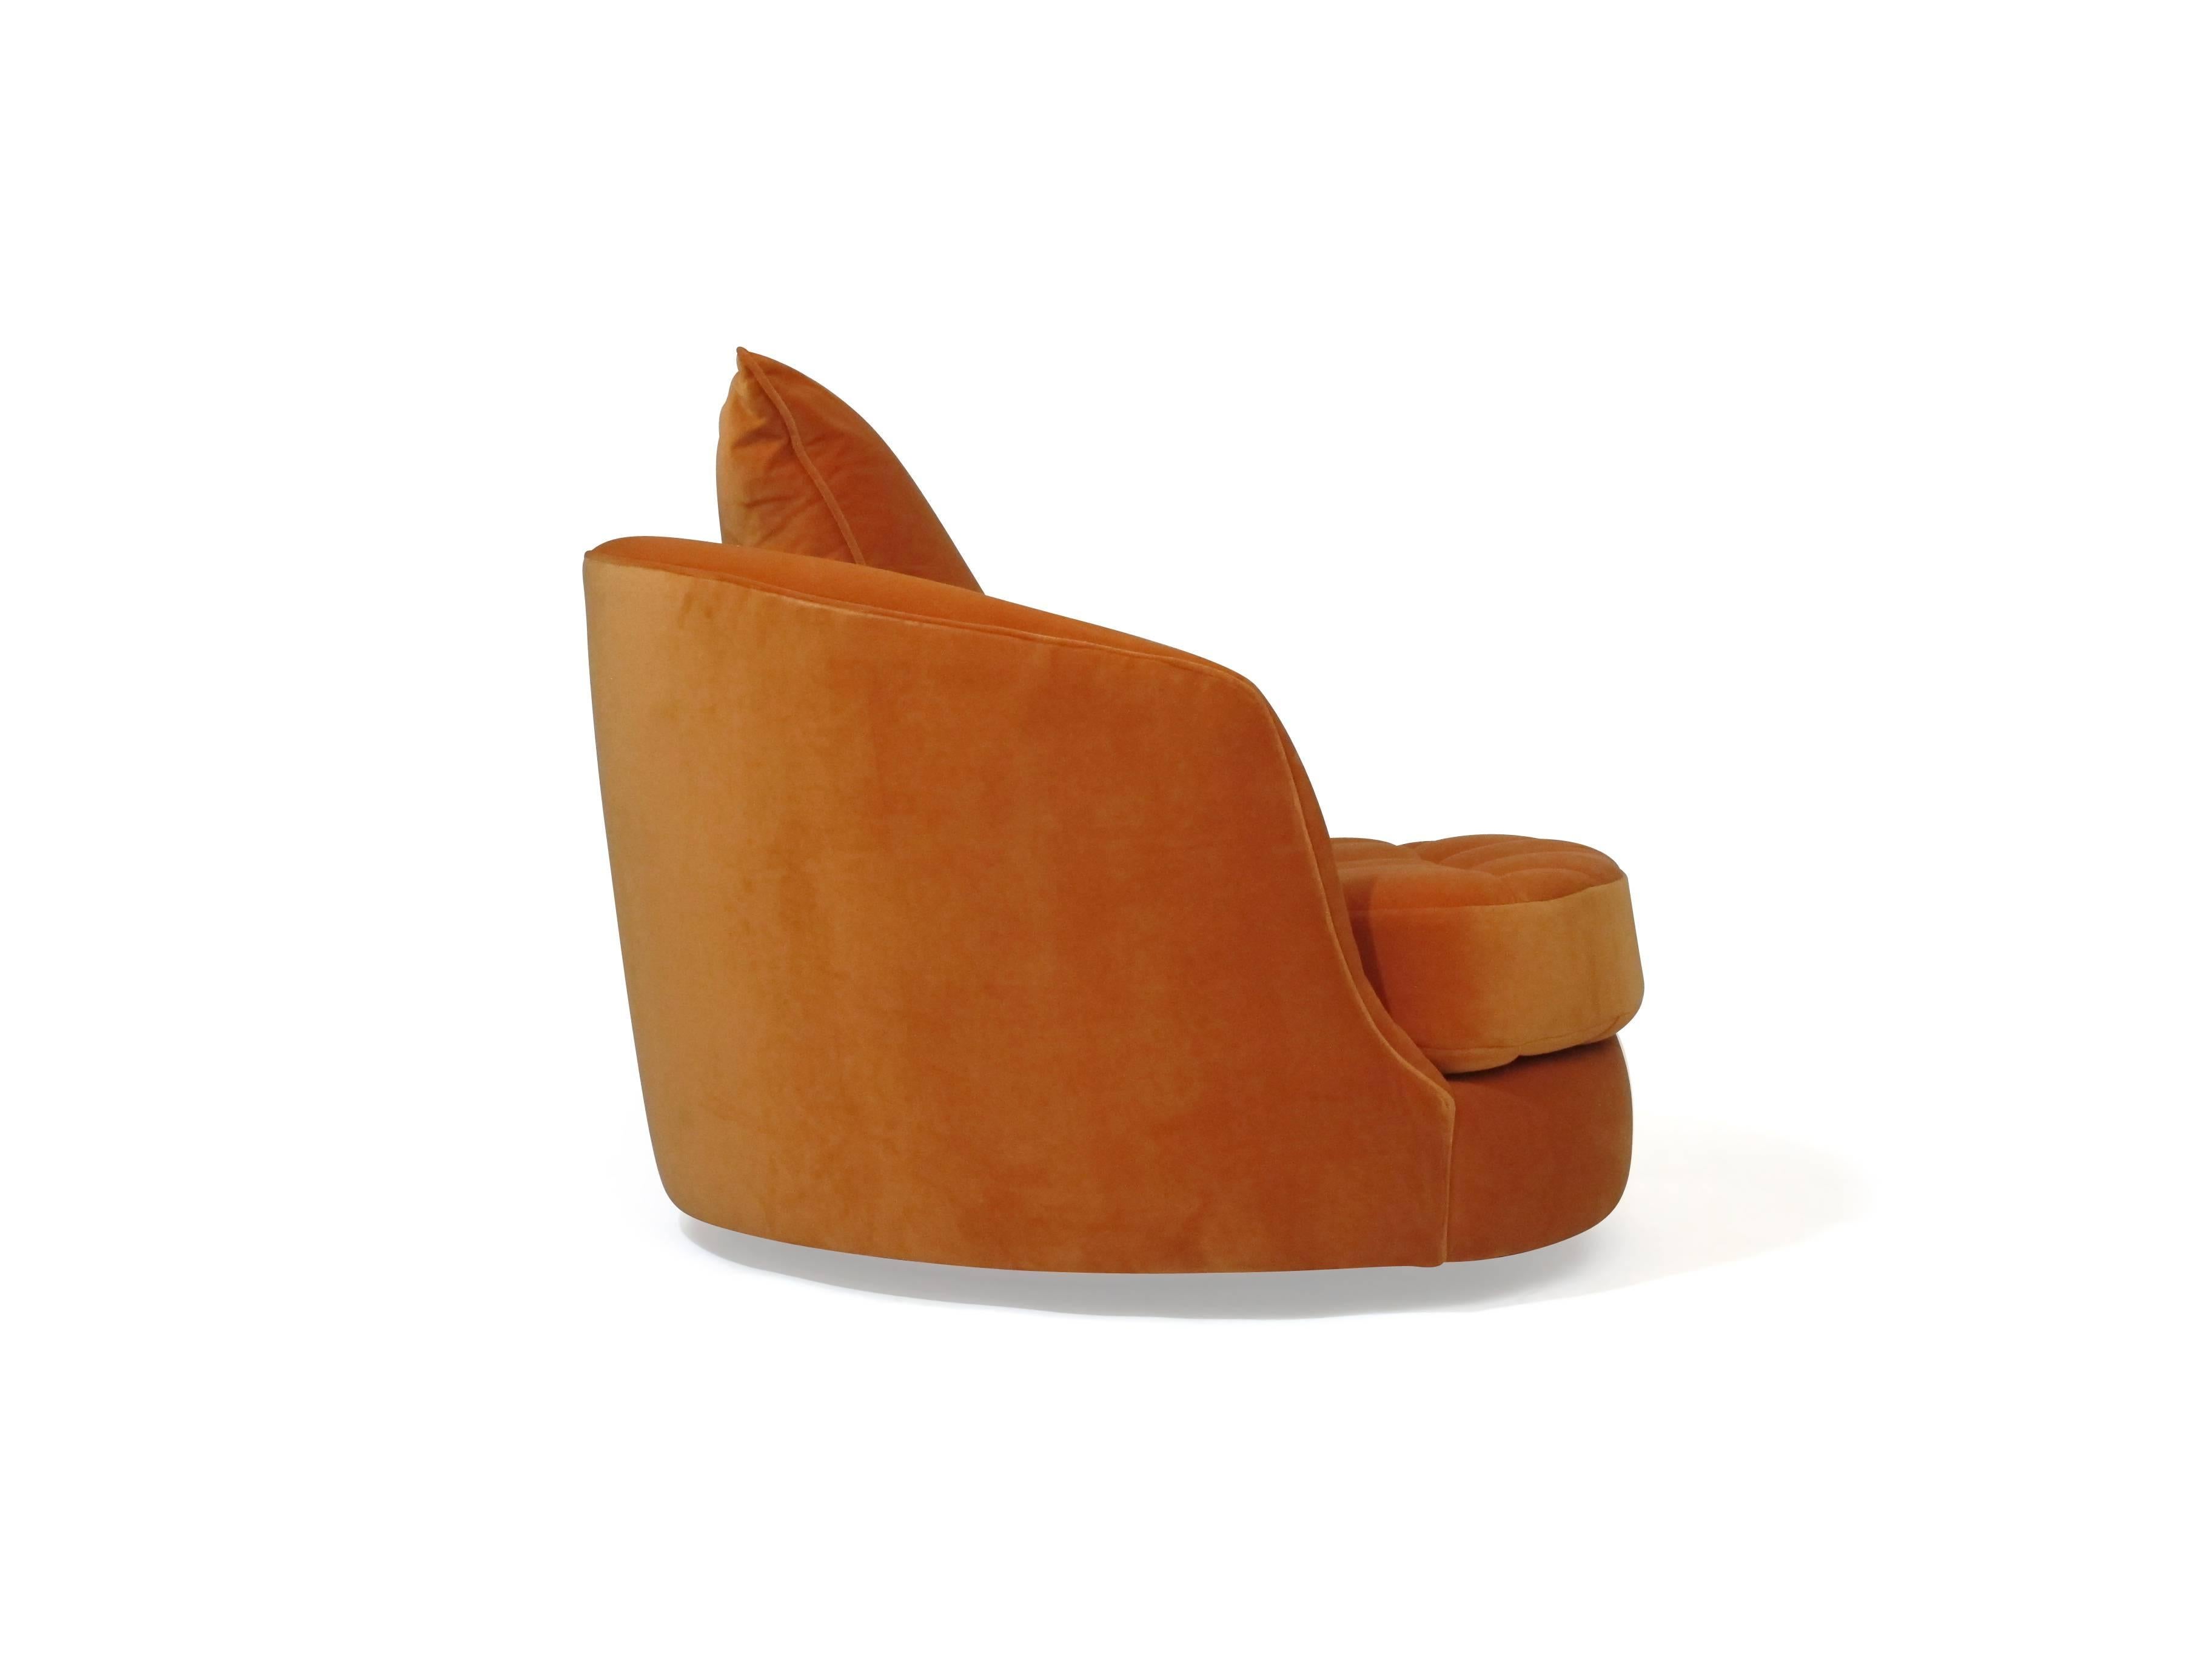 Swivel lounge chair designed by Milo Baughman for Thayer Coggin in orange velvet. 
Ottoman measures: W 36, D 24, H 14 in.